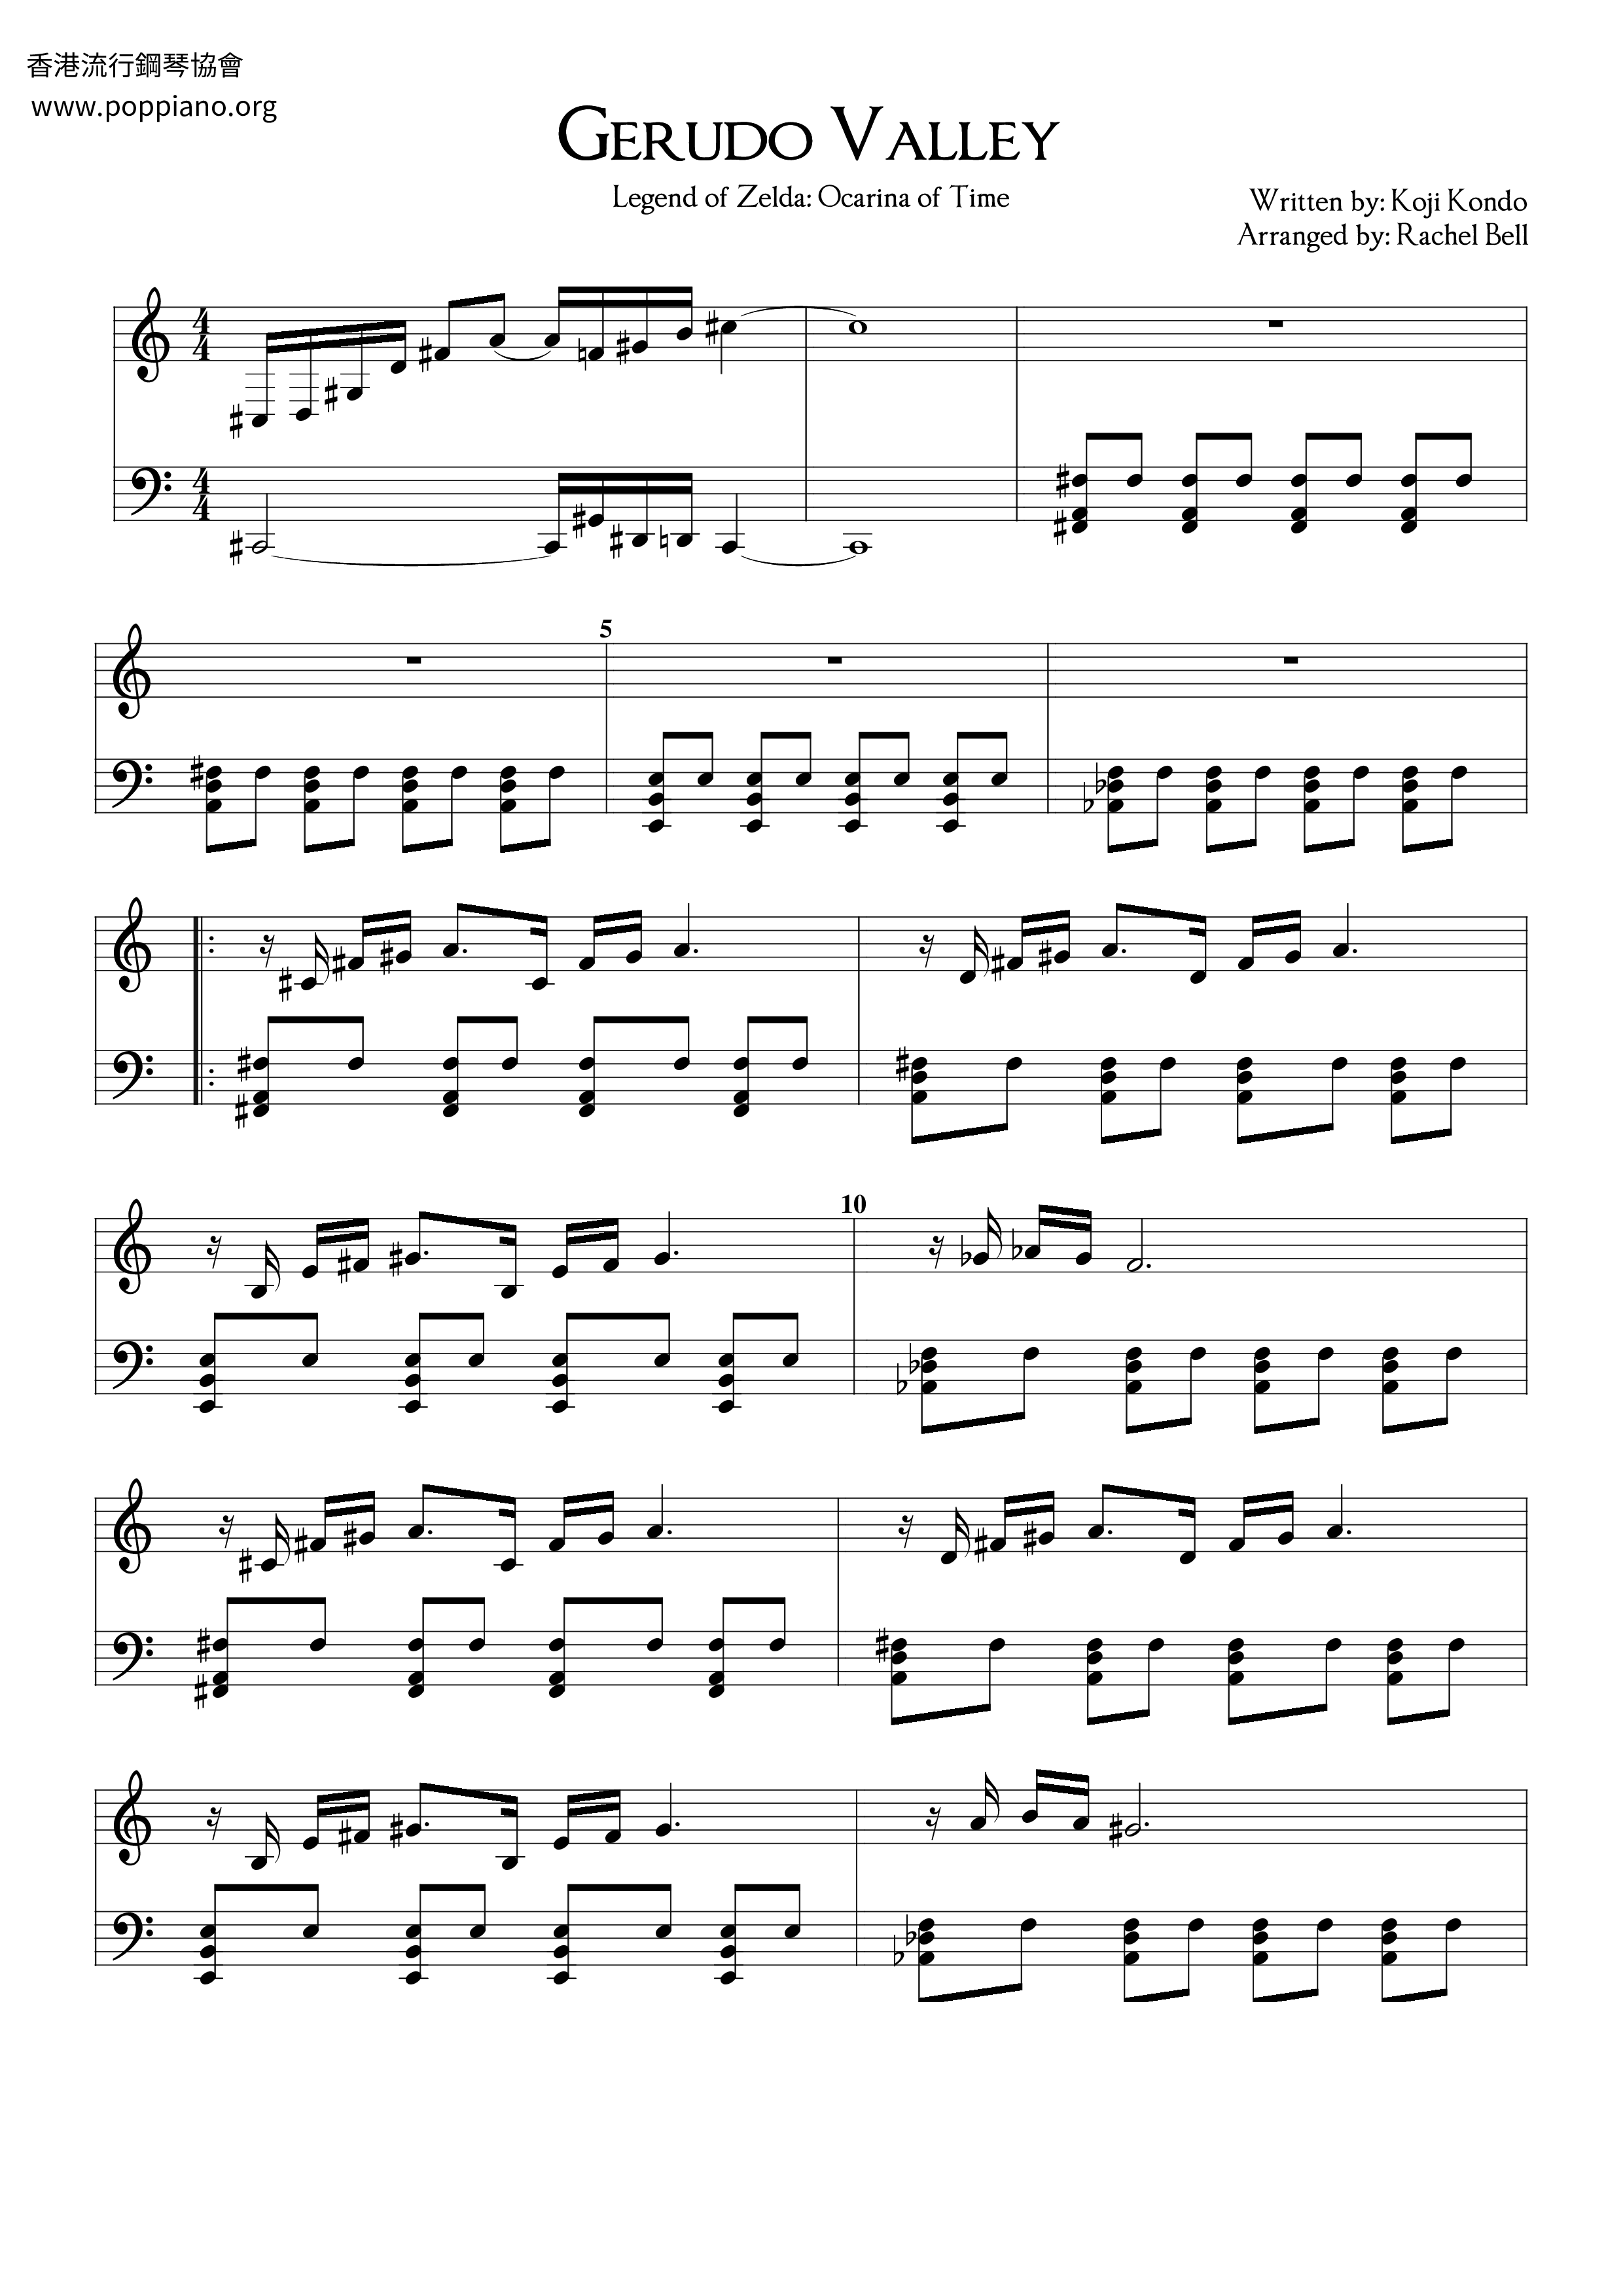 Gerudo Valley | Sheet Music | Piano Score Free PDF Download HK Piano Academy